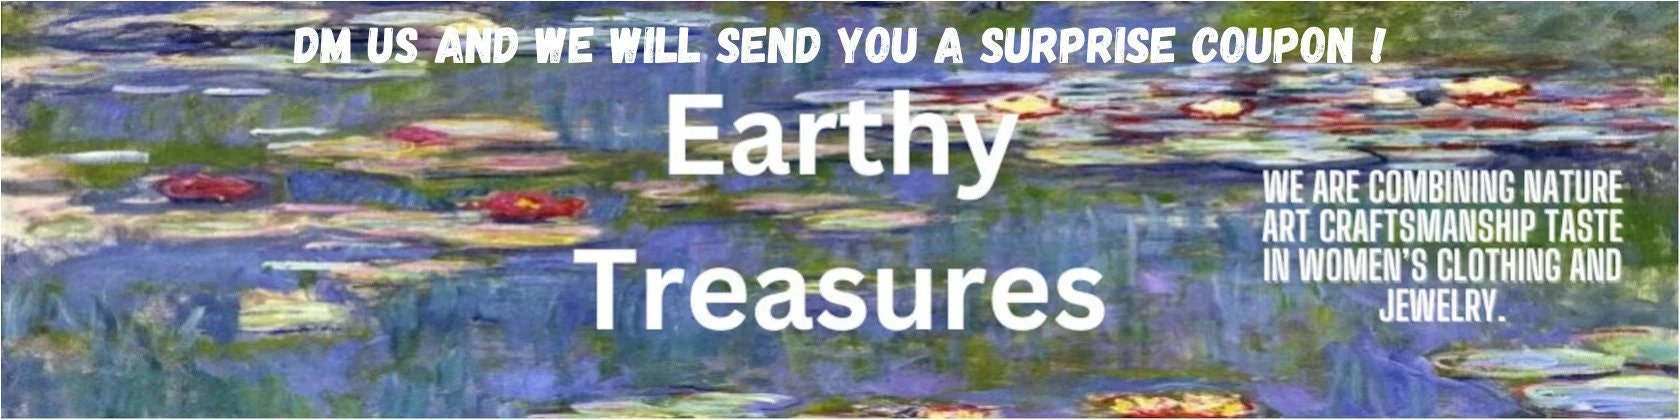 Earthly Treasures Silk Scarf